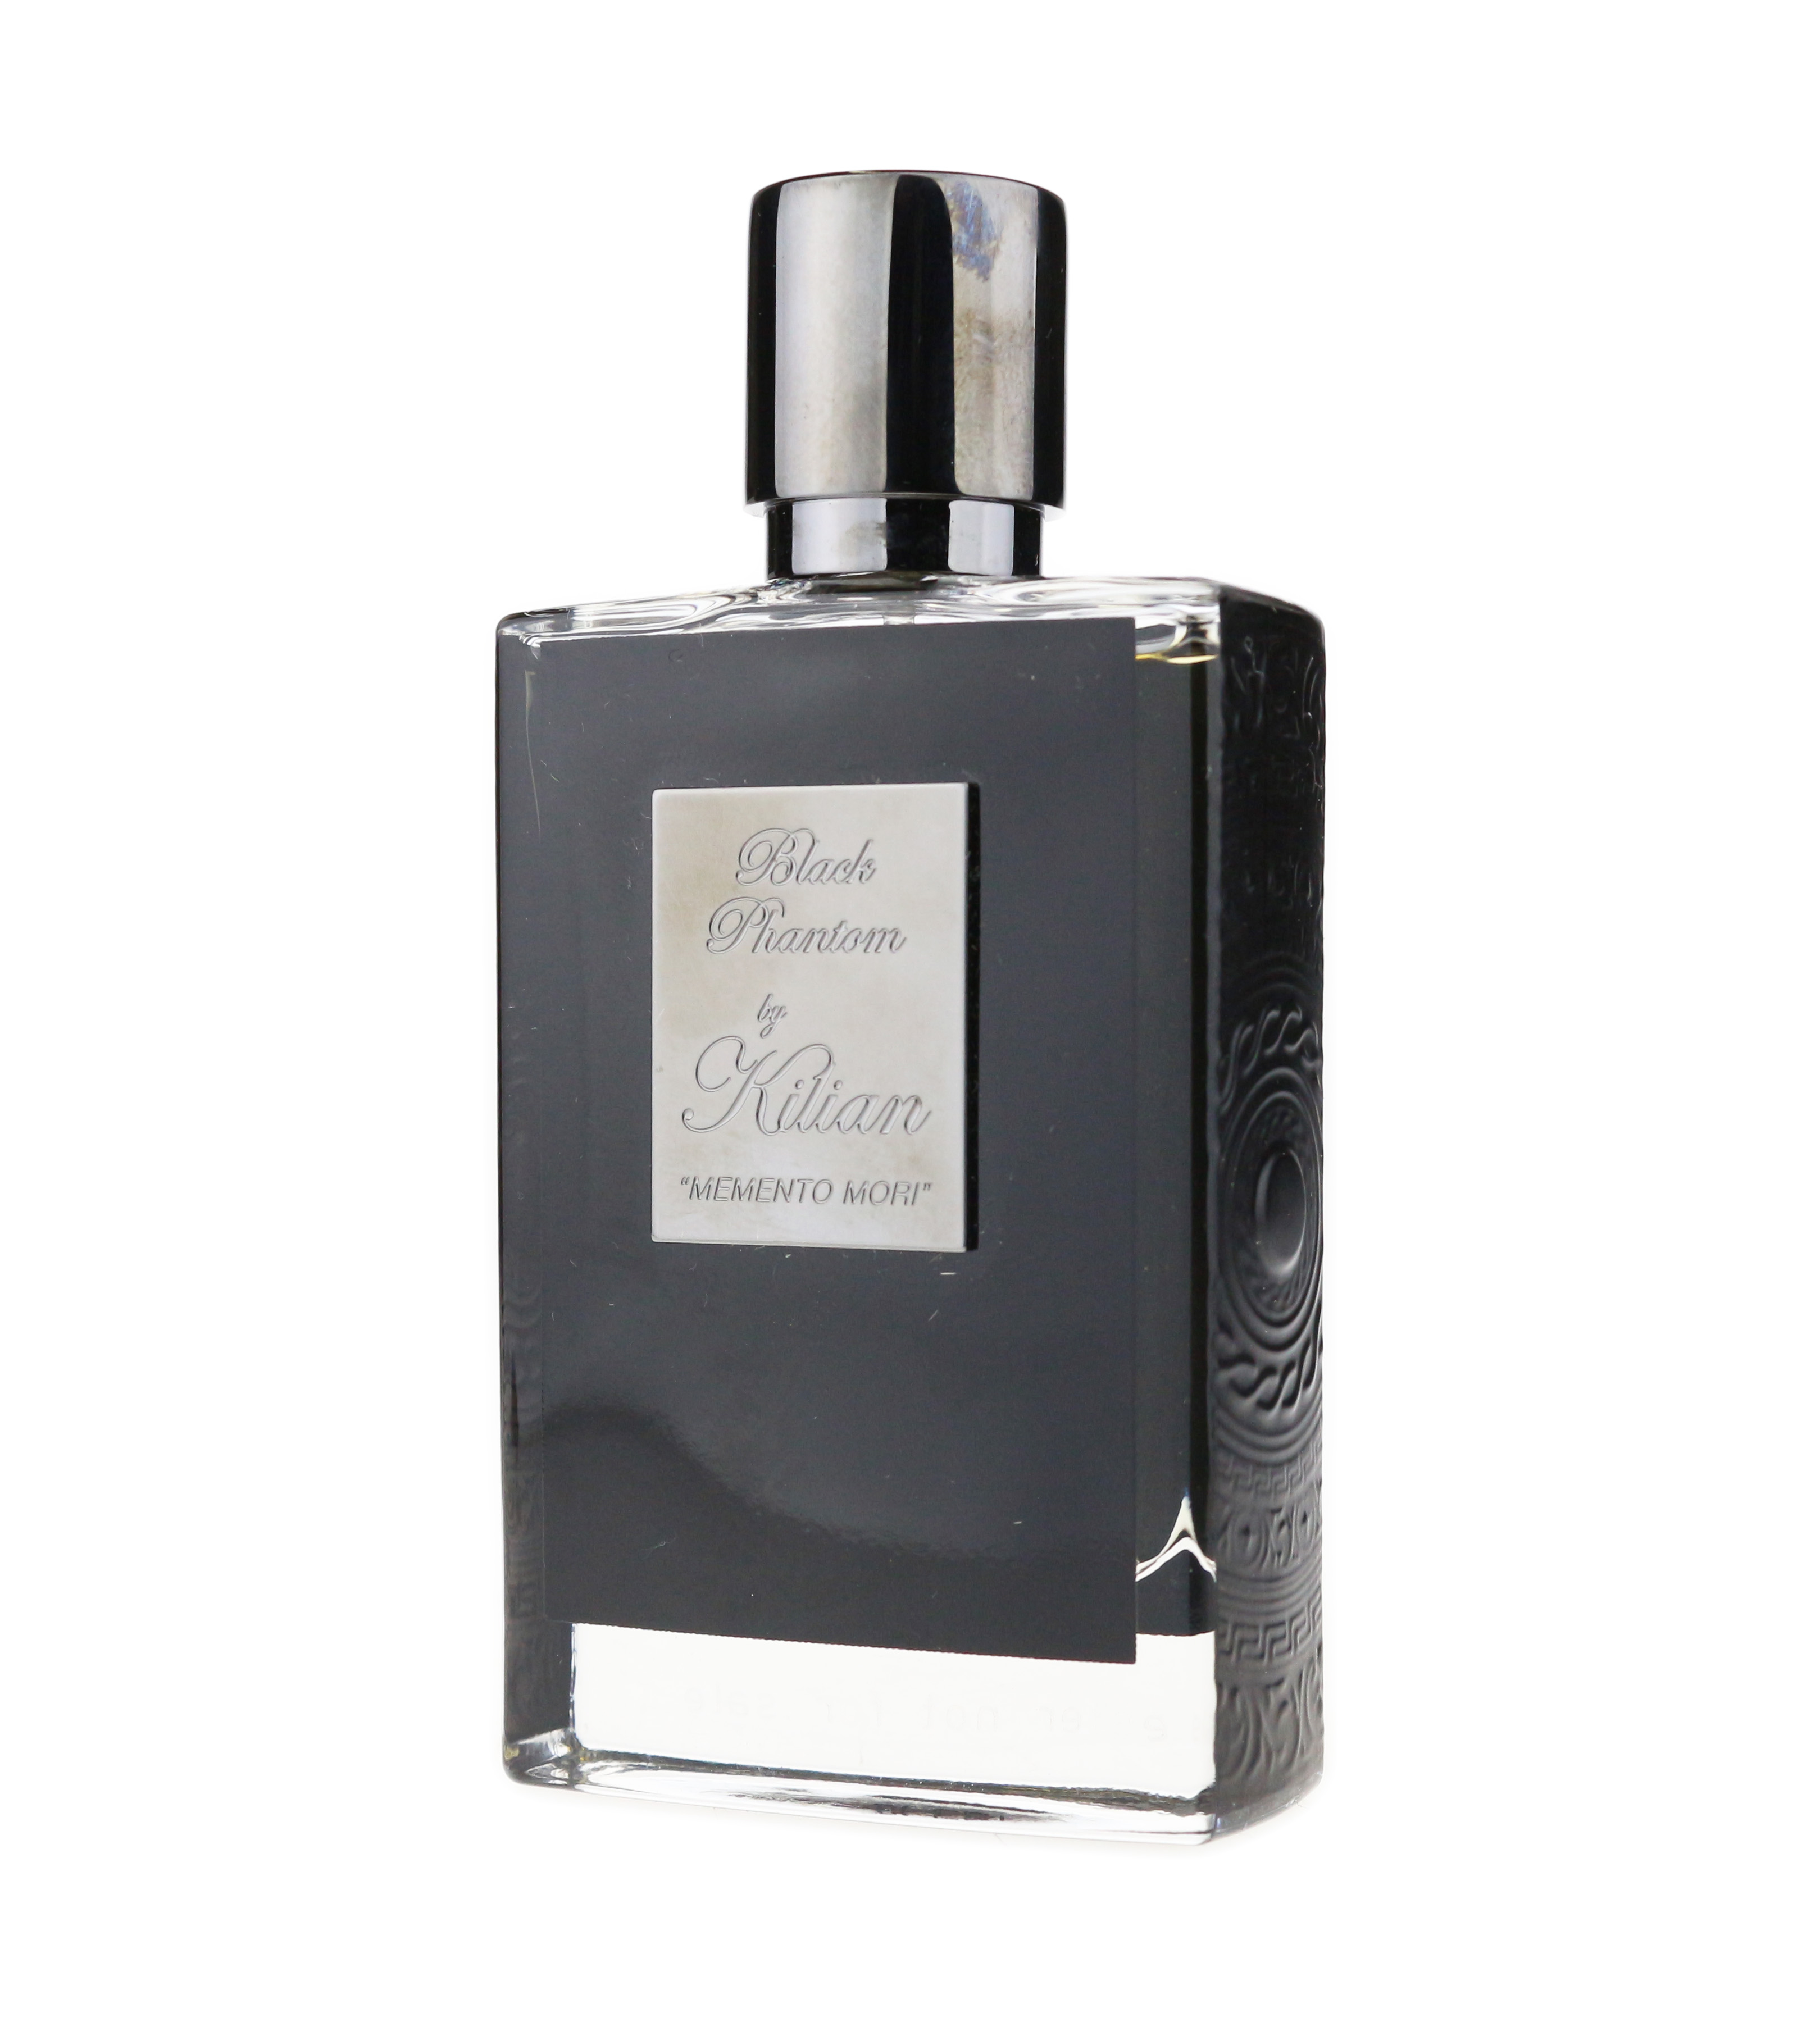 Kilian 'Black Phantom Memento Mori' Eau De Parfum 1.7oz/50ml New Tester ...